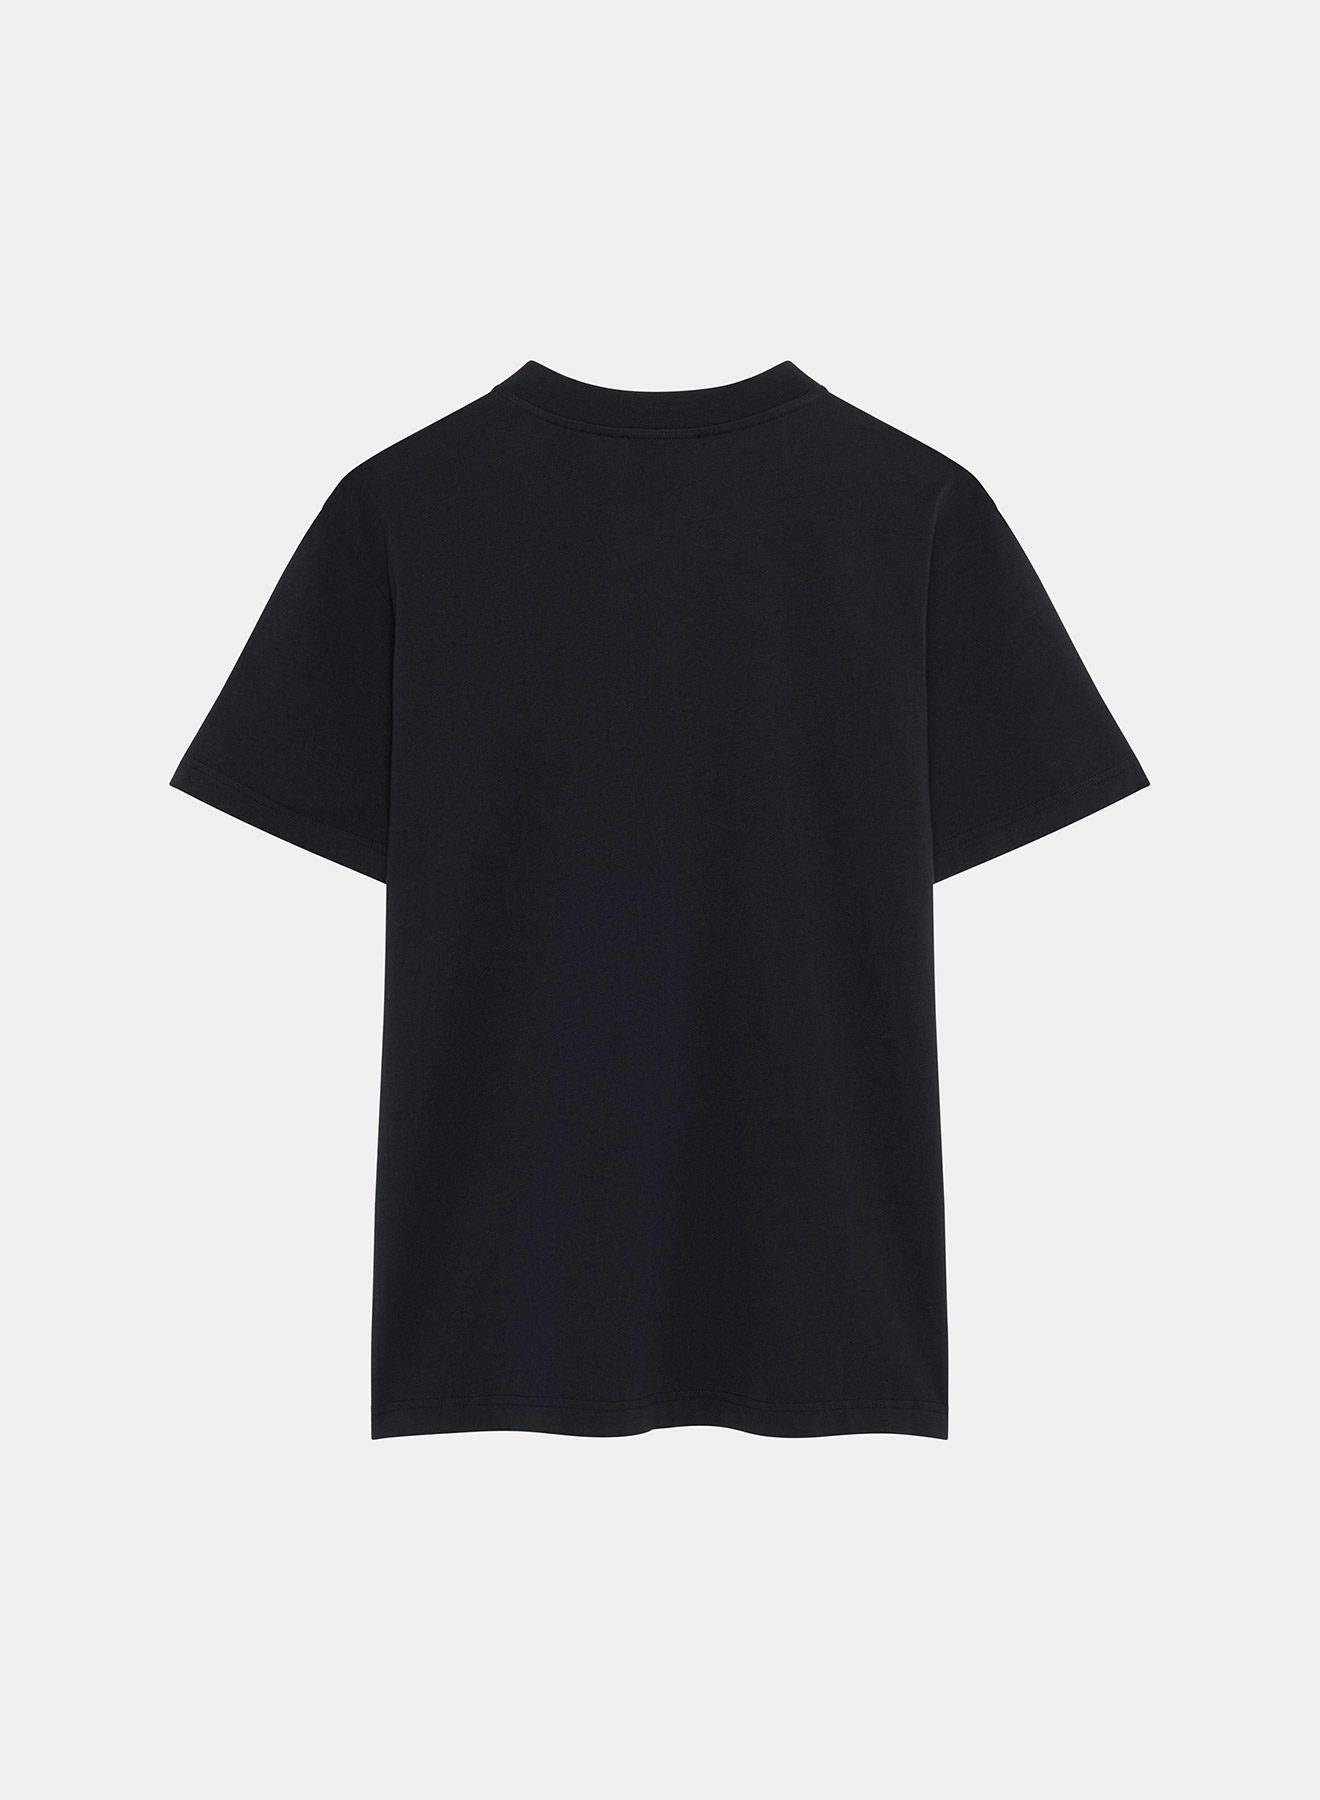  Three Graces printed t-shirt Black - Nina Ricci